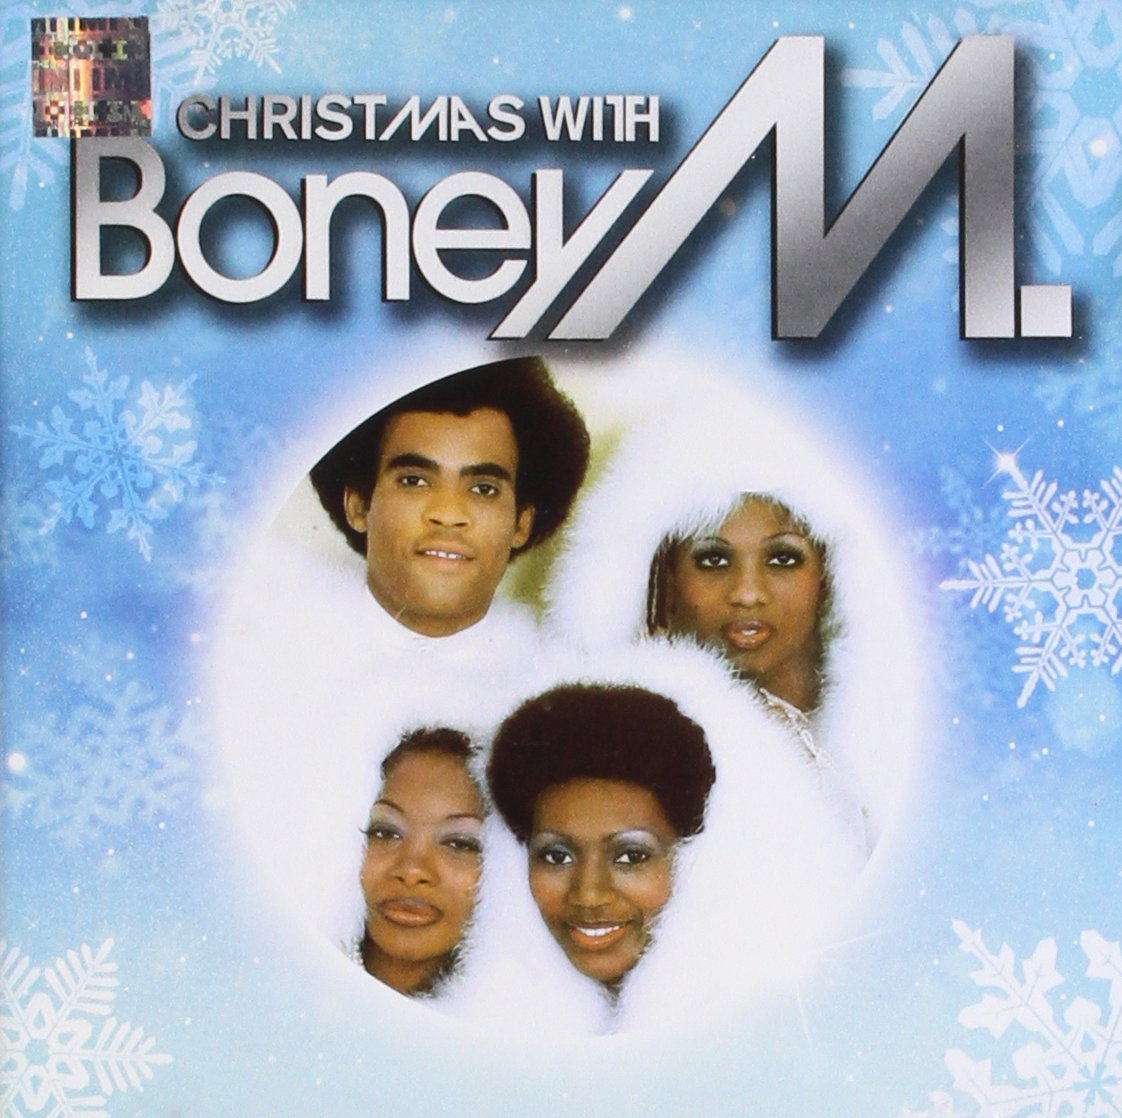 Boney m видео. Группа Boney m. 1978. Группа Бони эм. Boney m 1975. Группа Boney m. 2020.